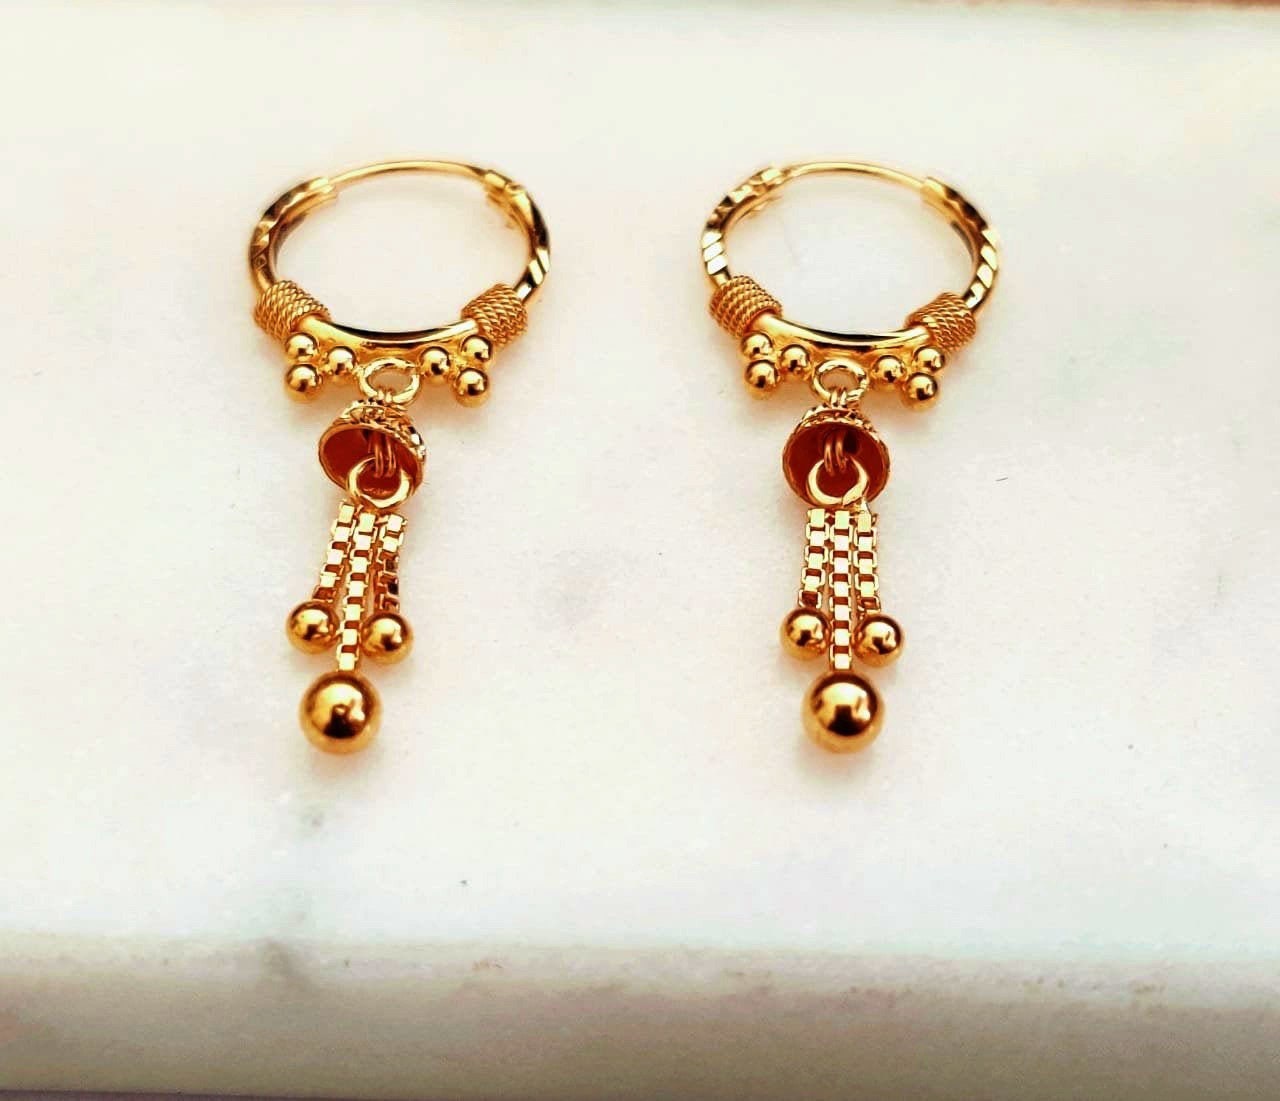 Livy Gold Huggie Earrings in White Crystal | Kendra Scott